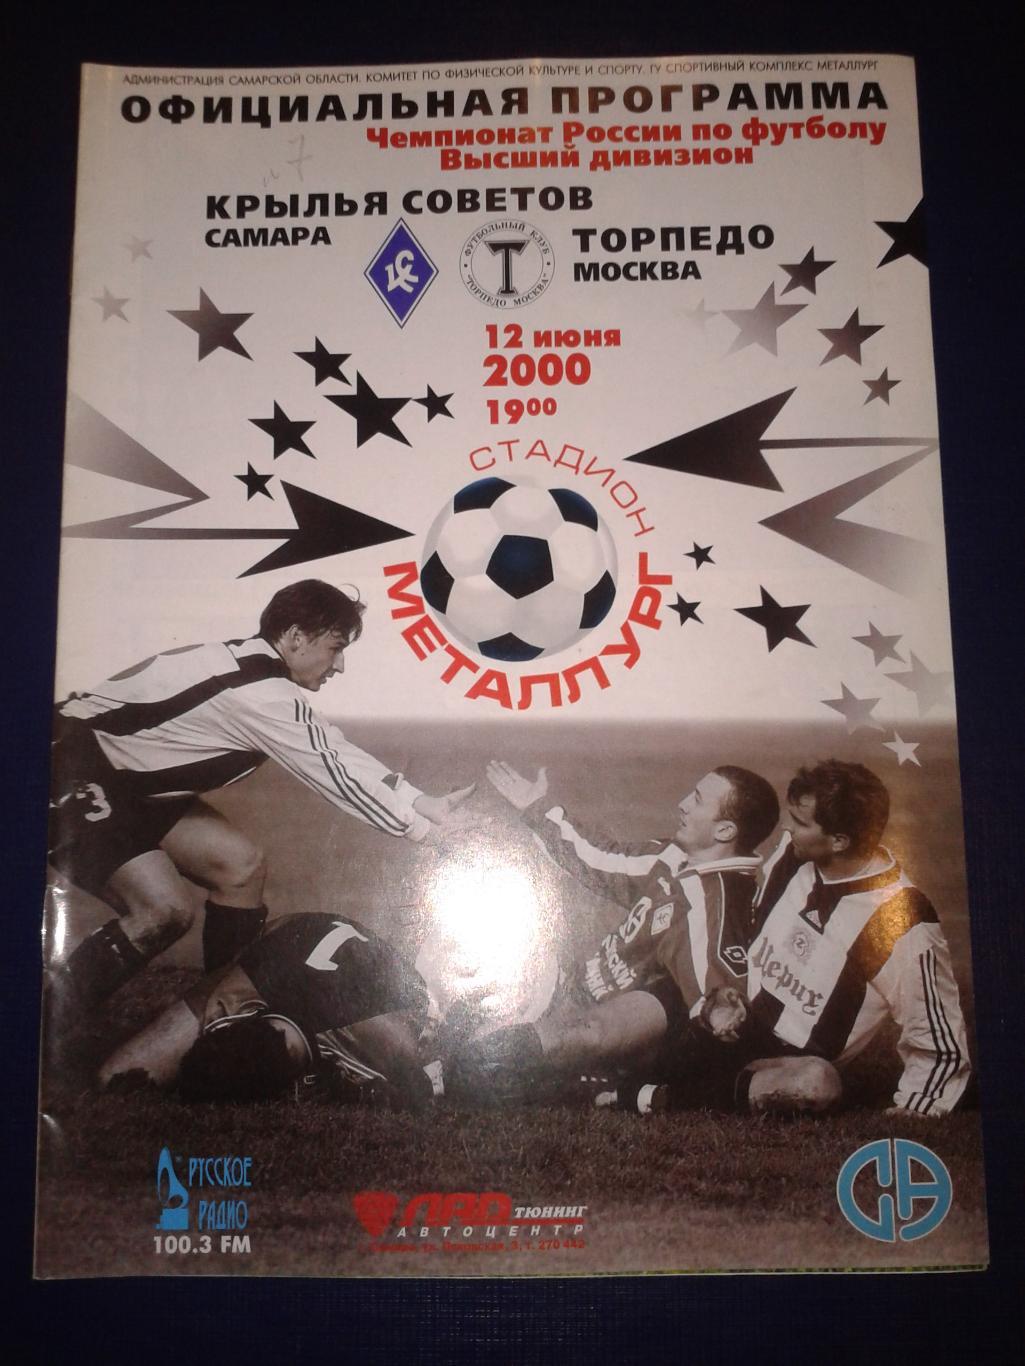 2000 Крылья Советов Самара-Торпедо Москва